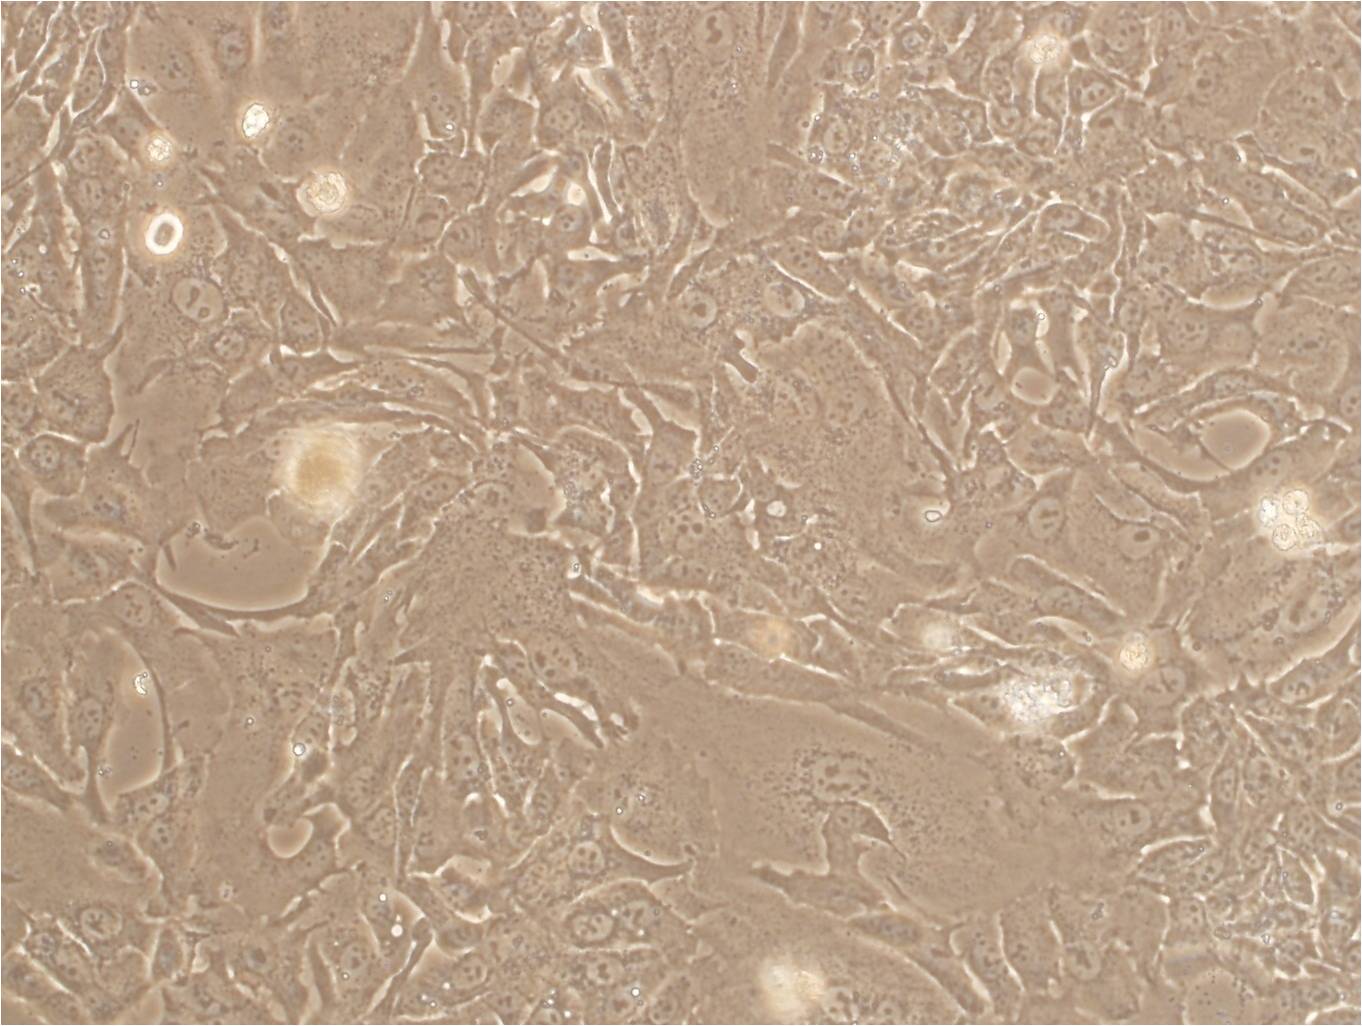 V79-GalK1 epithelioid cells仓鼠肺细胞系,V79-GalK1 epithelioid cells